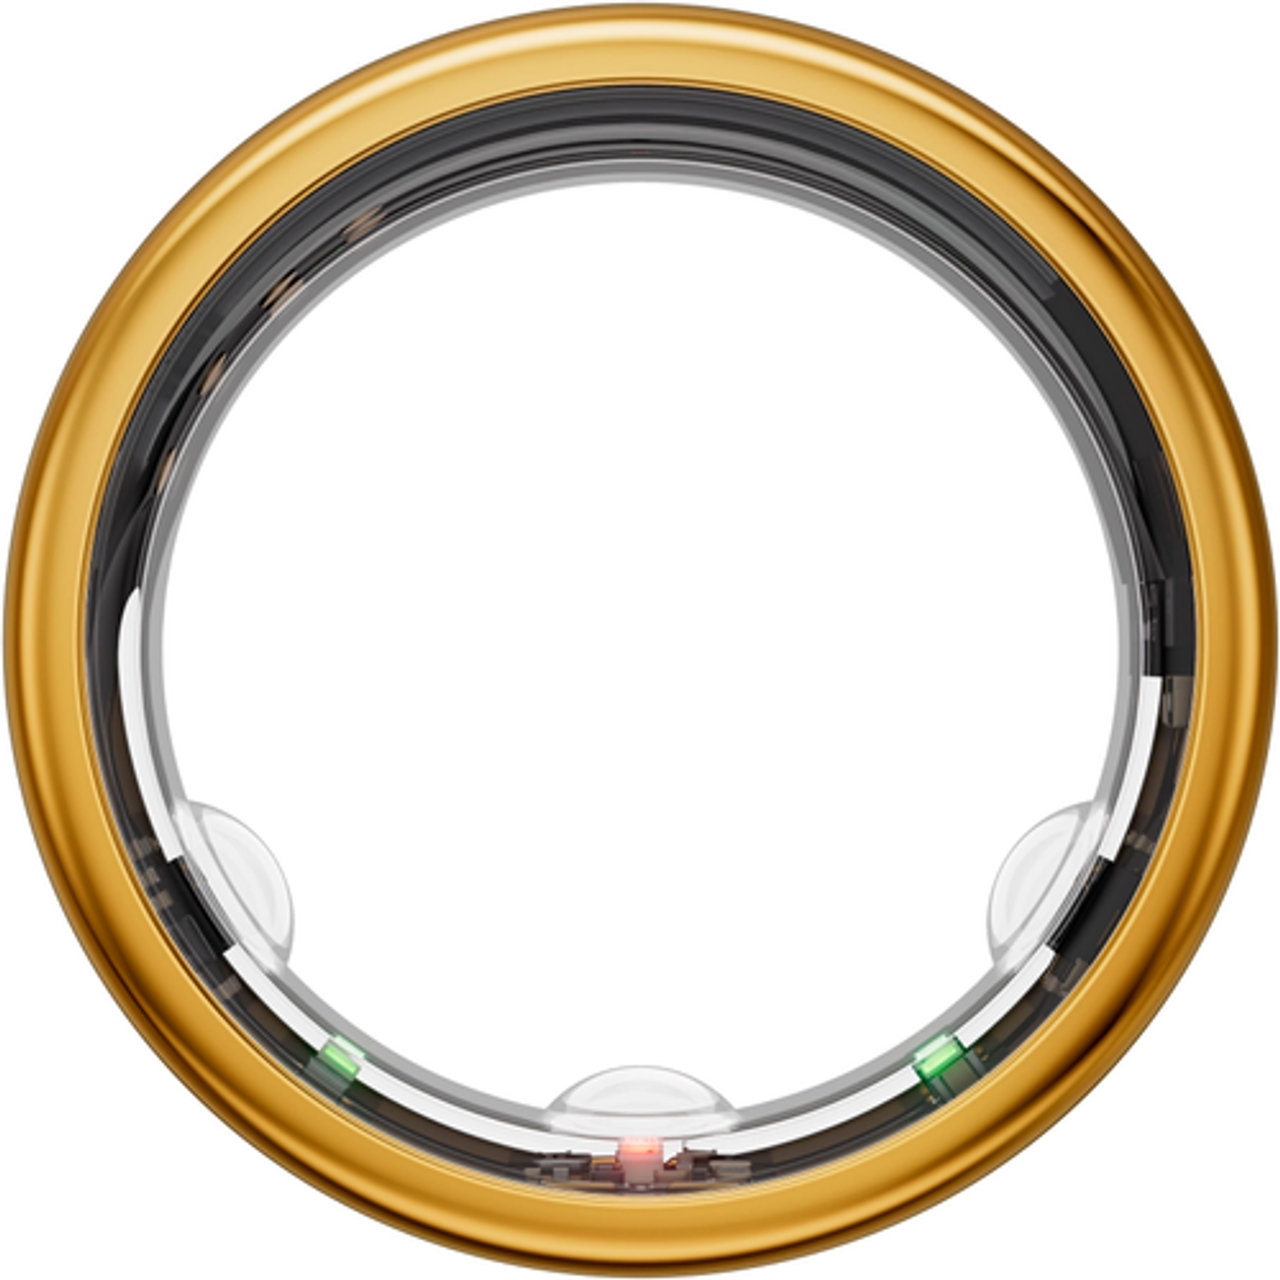 Oura Ring Gen3 - Horizon - Size 13 - Gold